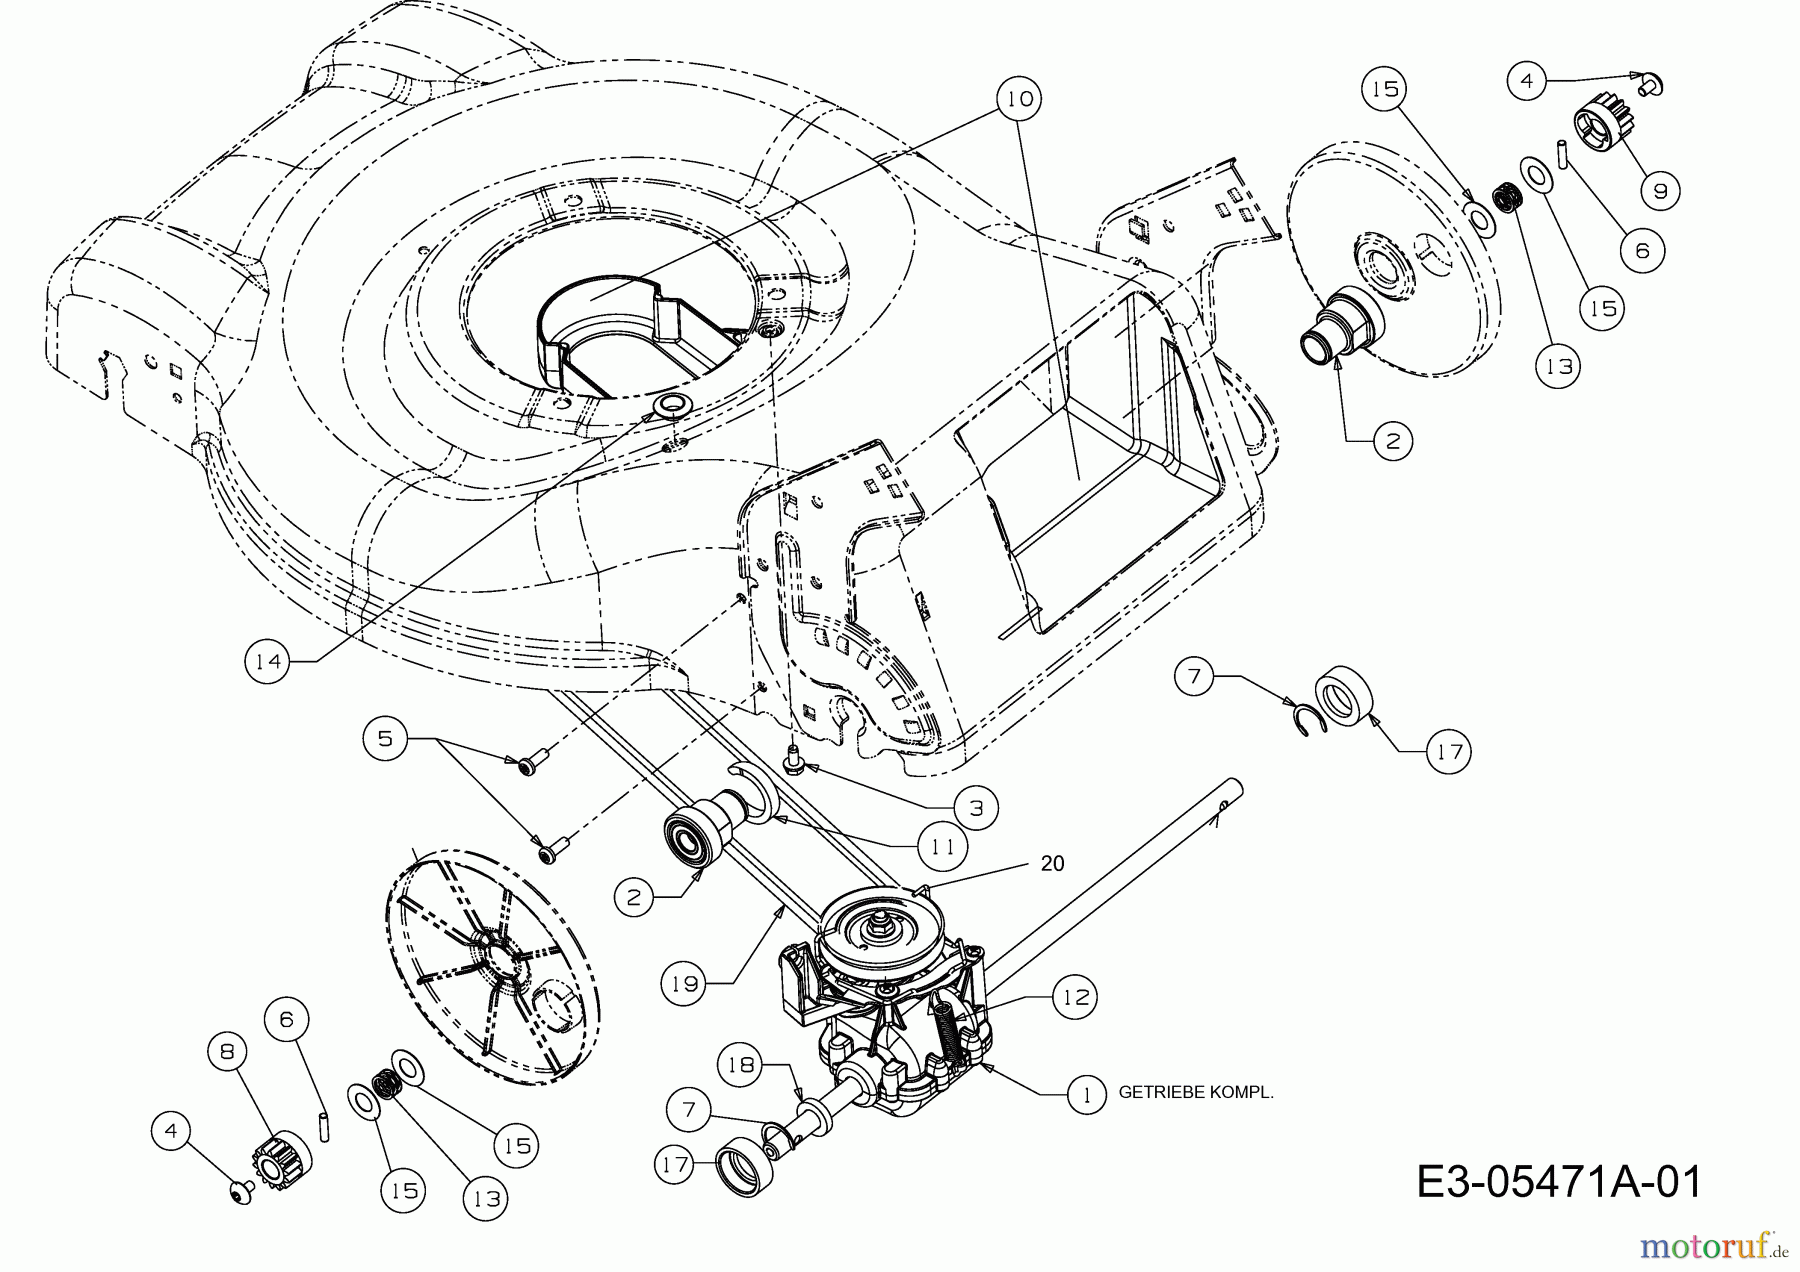  Bricoline Motormäher mit Antrieb 46 SP 12E-J54J625  (2010) Getriebe